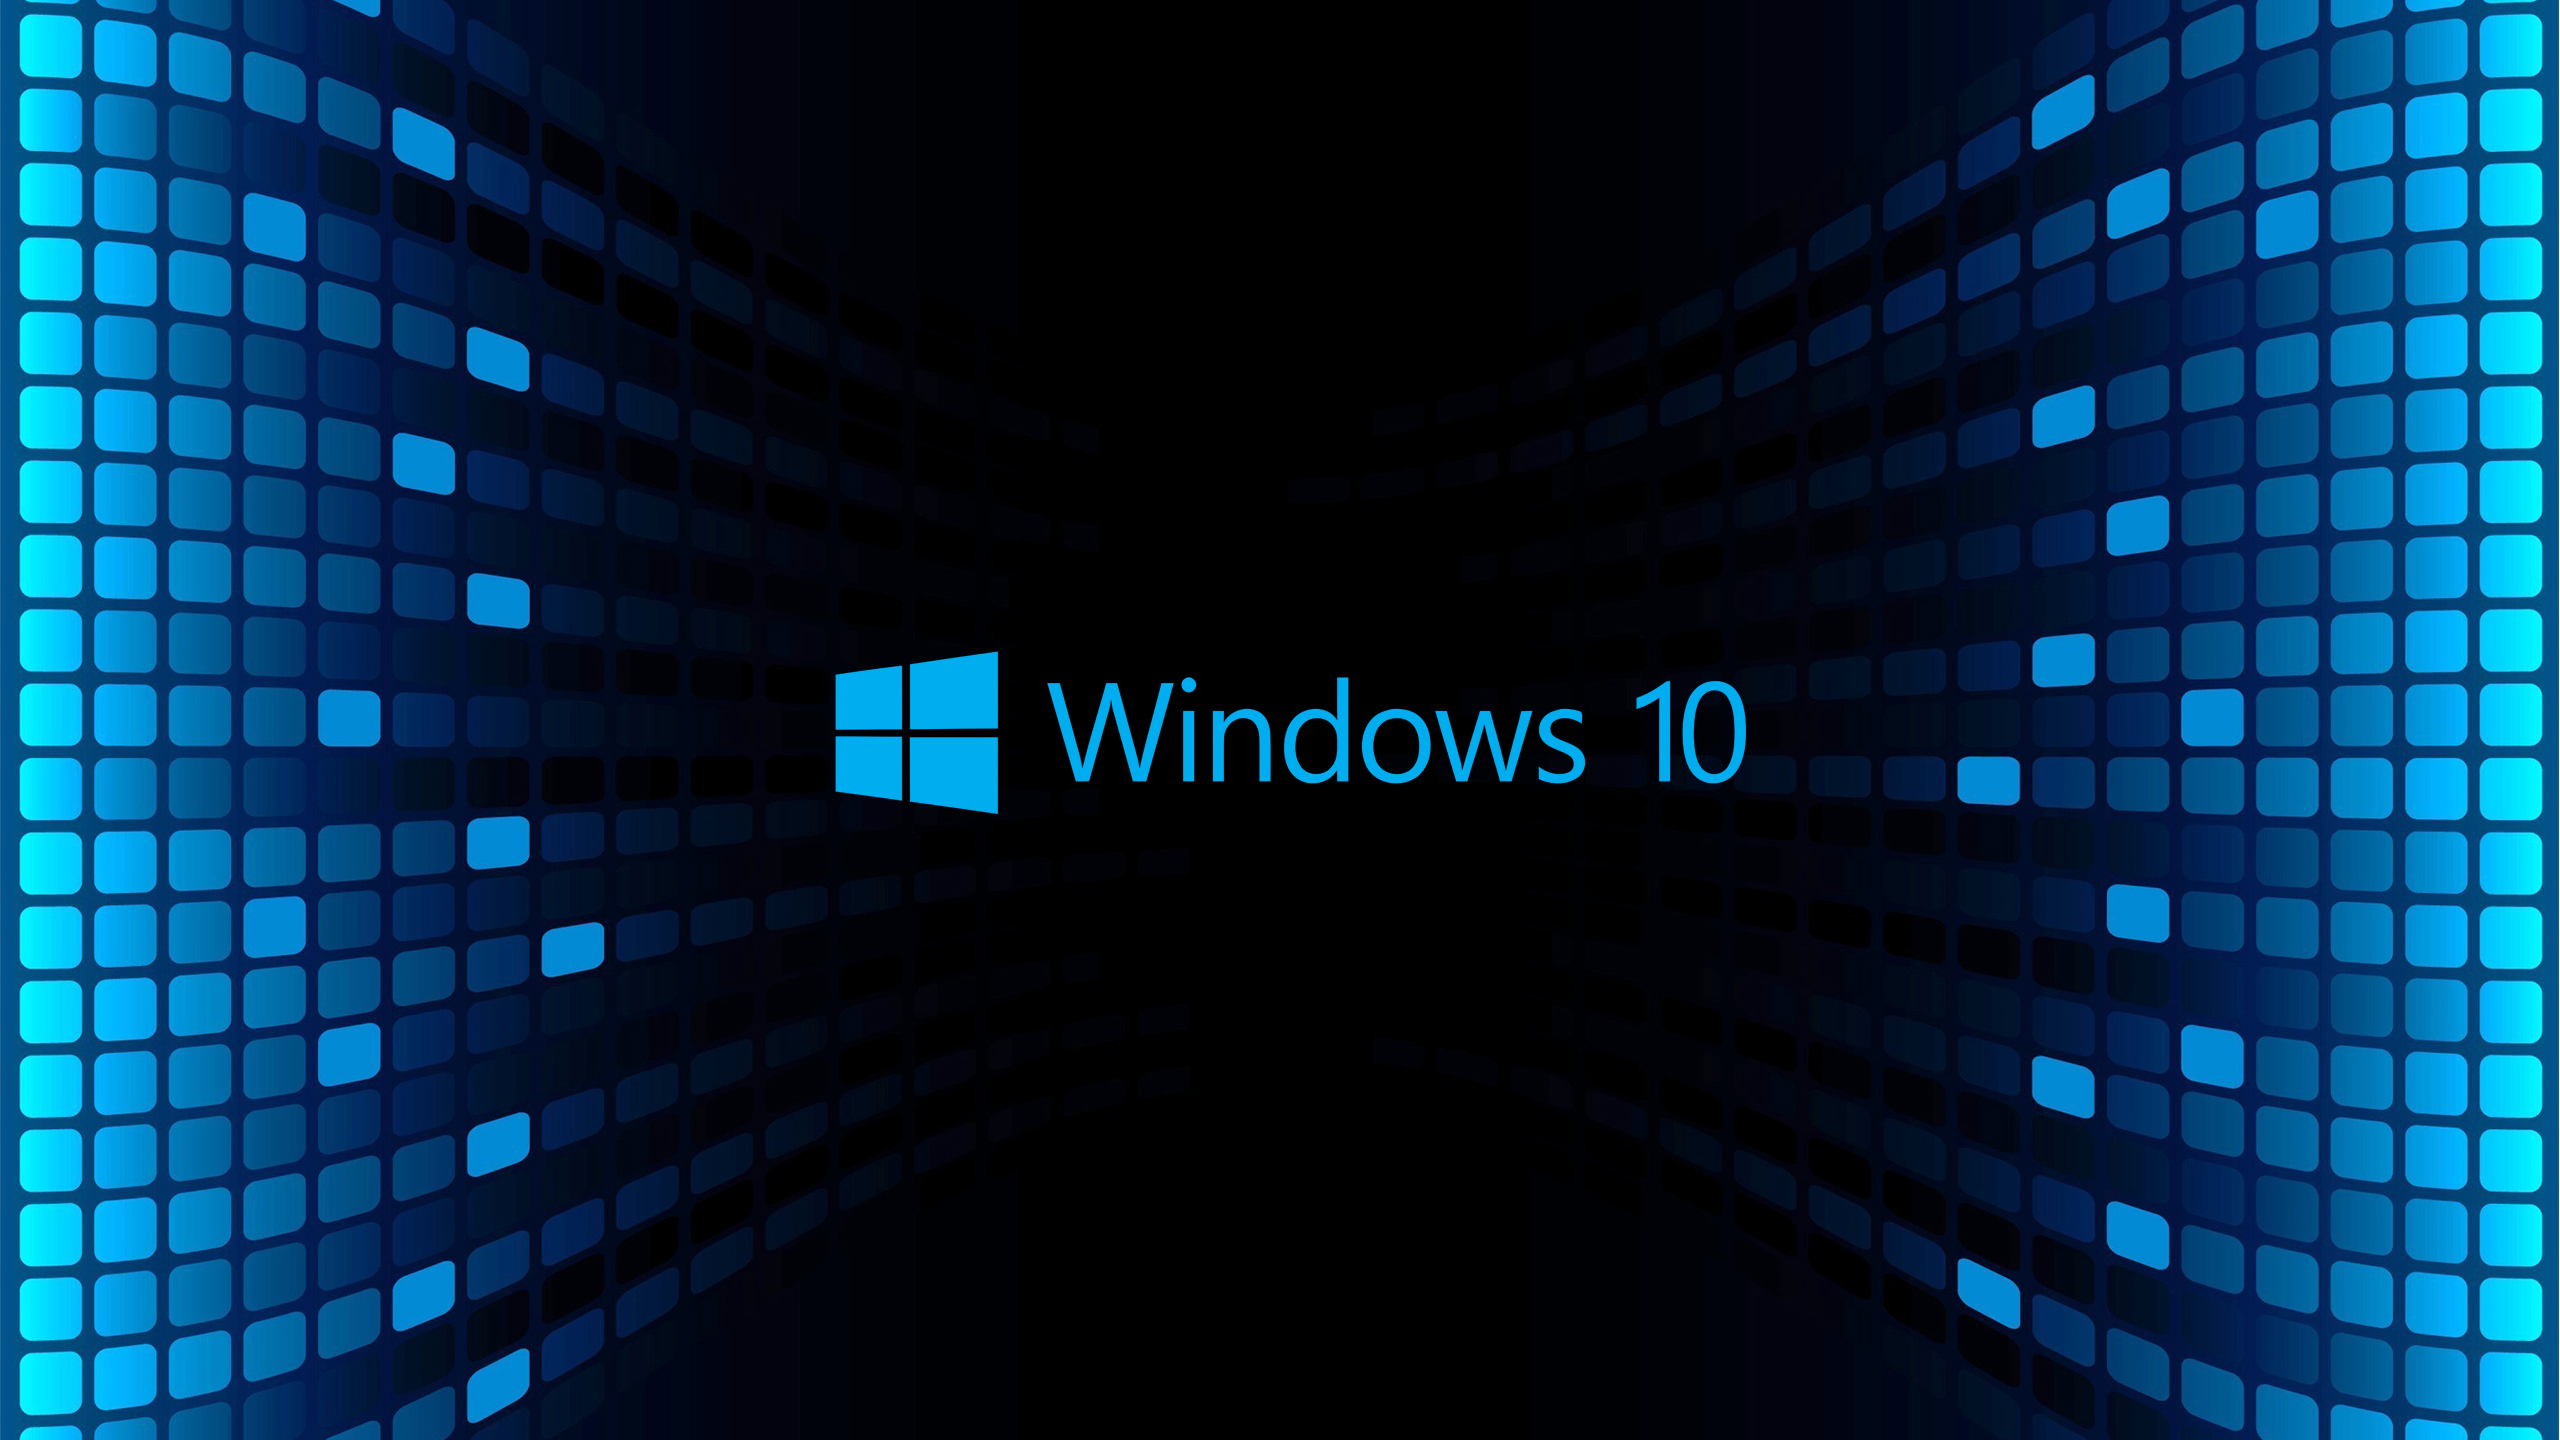 Windows 10 Wallpaper Hd 3d For Desktop Black Download